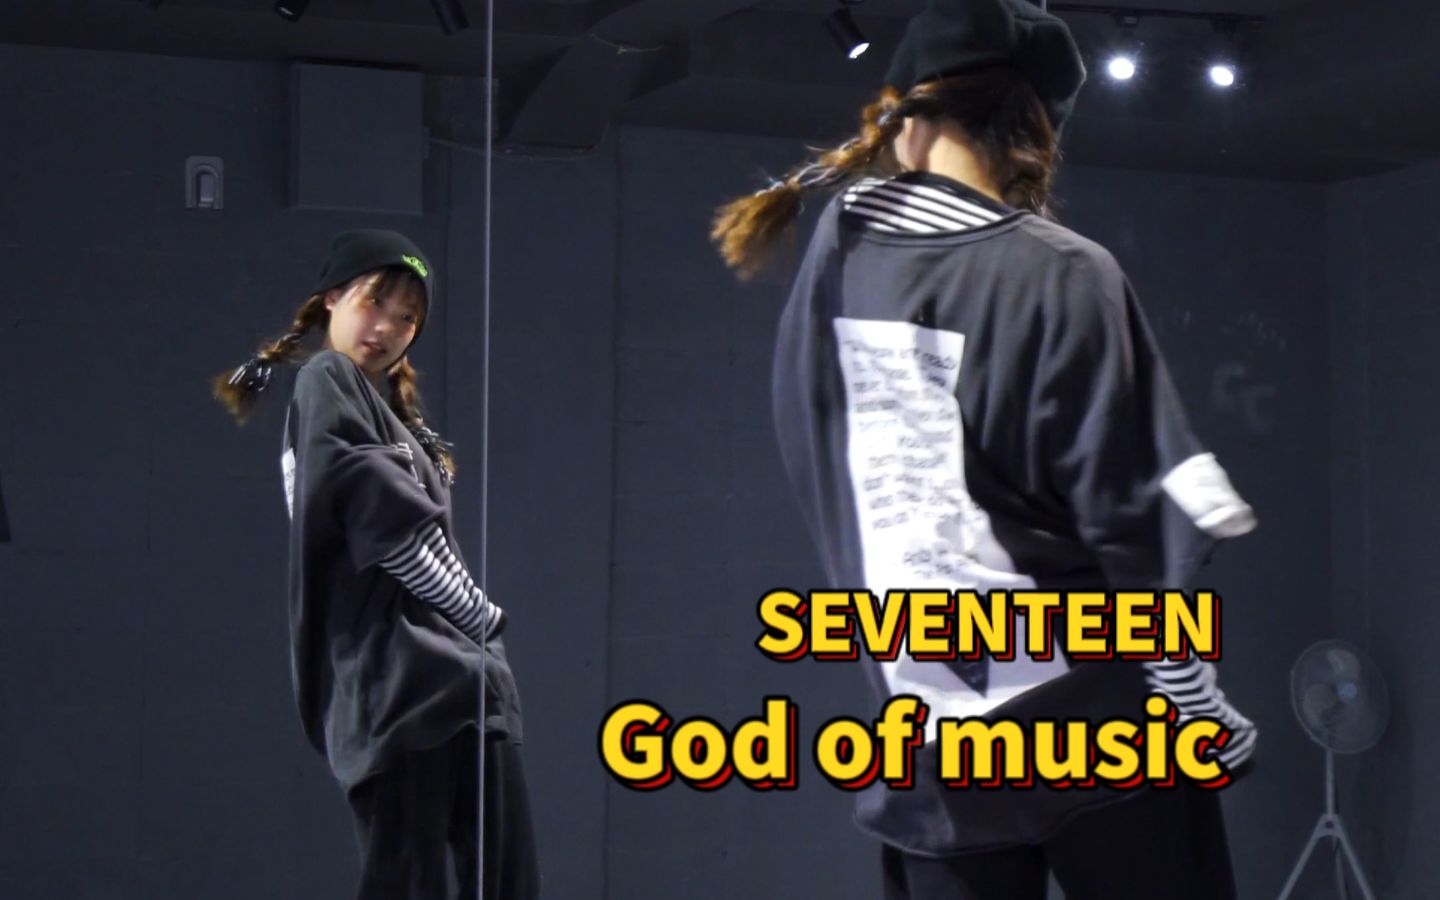 明天发教学!|音乐之神SEVENTEEN-God of music